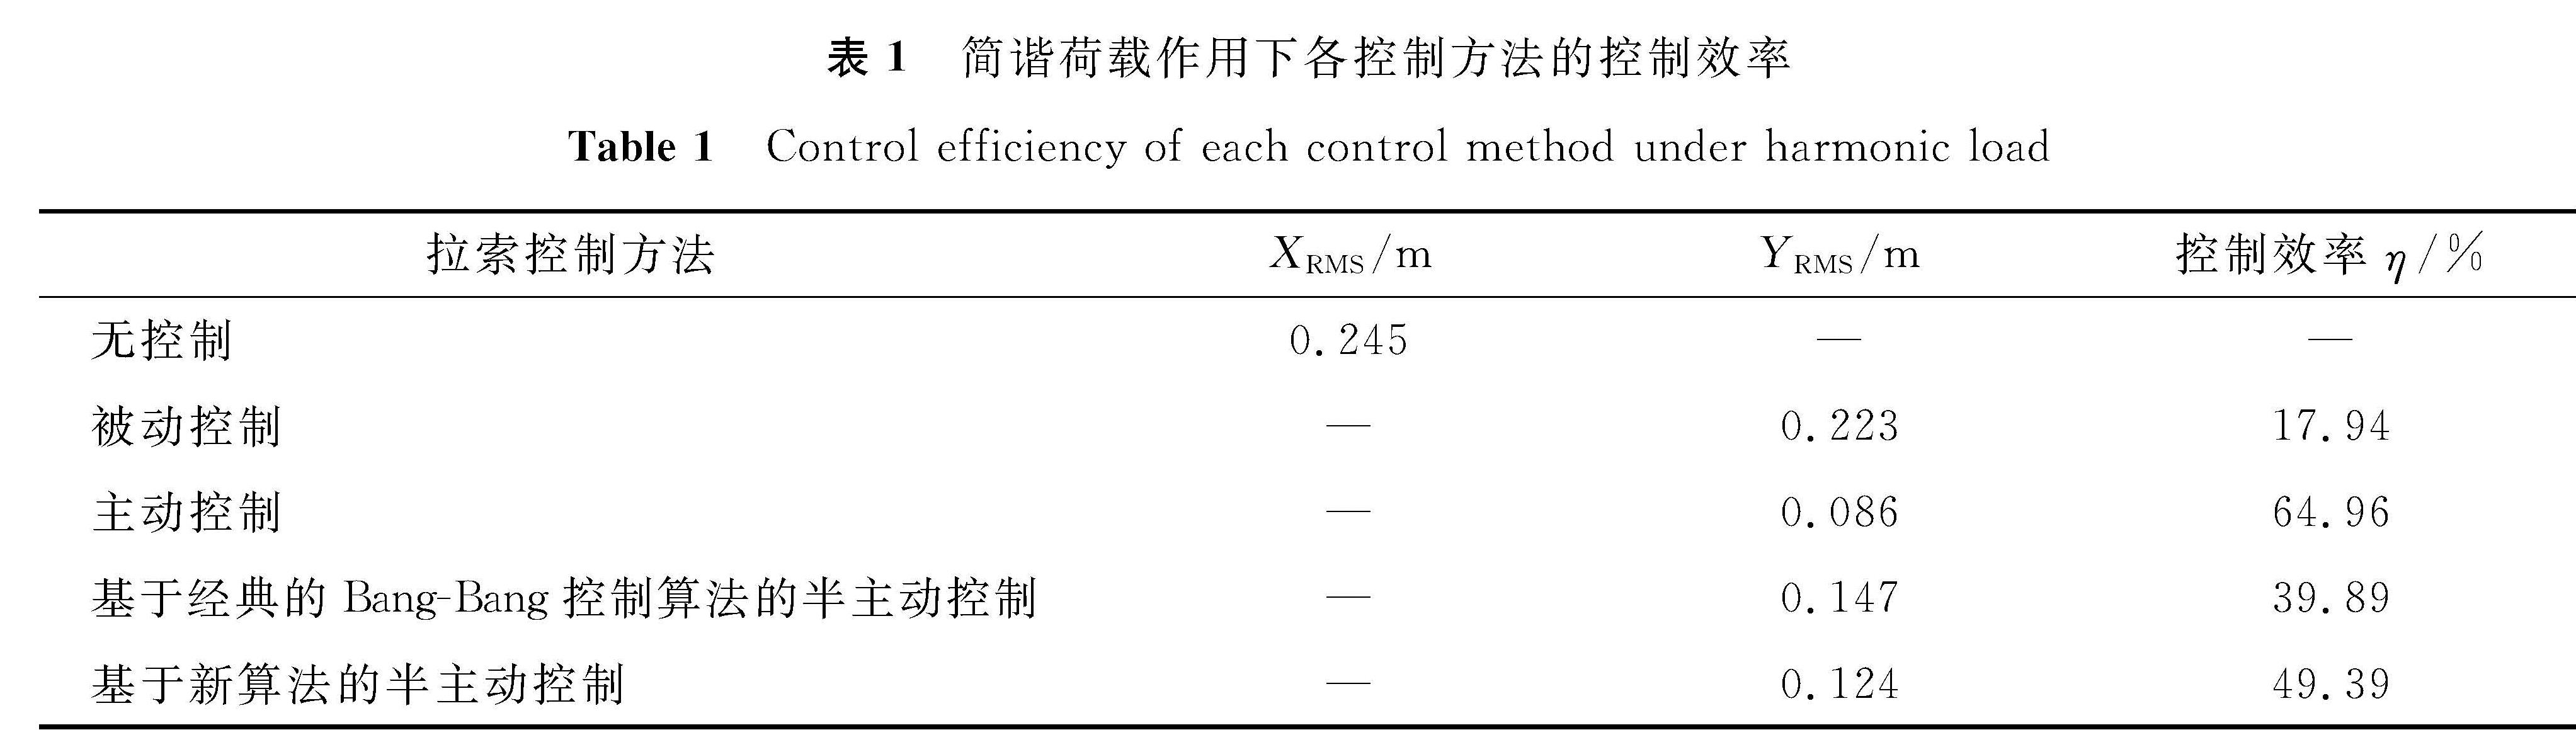 表1 简谐荷载作用下各控制方法的控制效率<br/>Table 1 Control efficiency of each control method under harmonic load